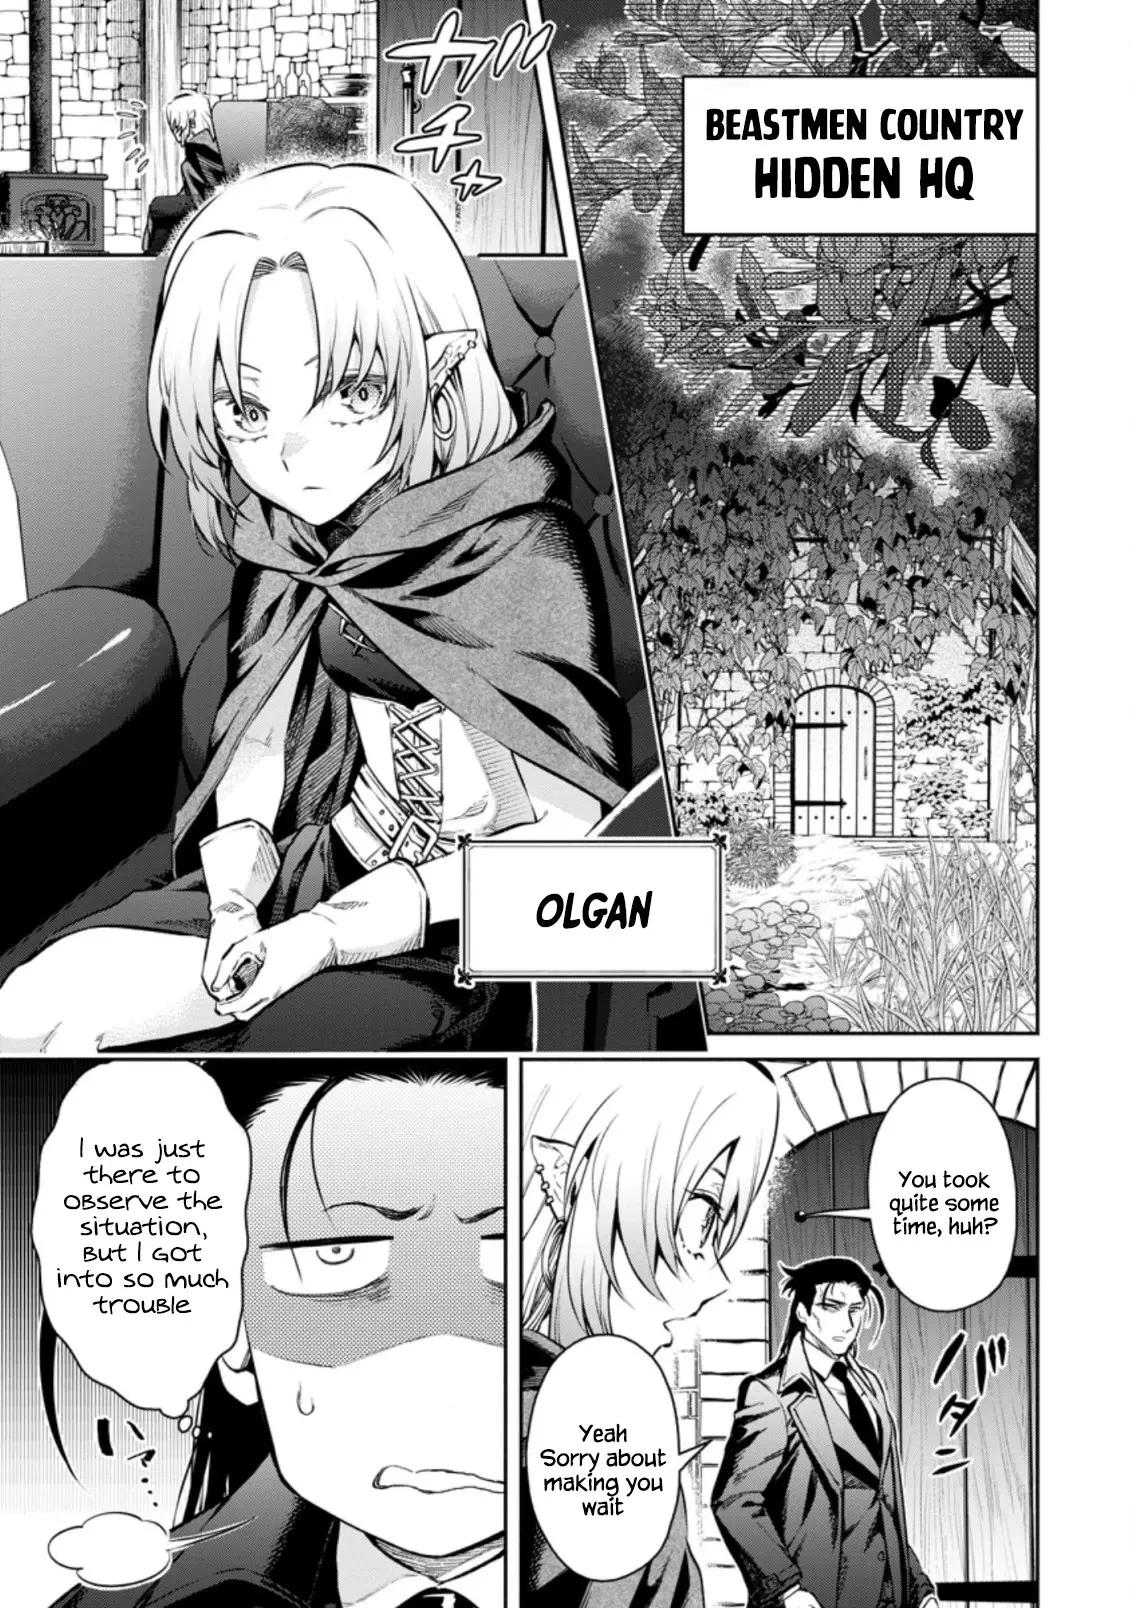 Demon Lord, Retry! R Manga Getting Anime